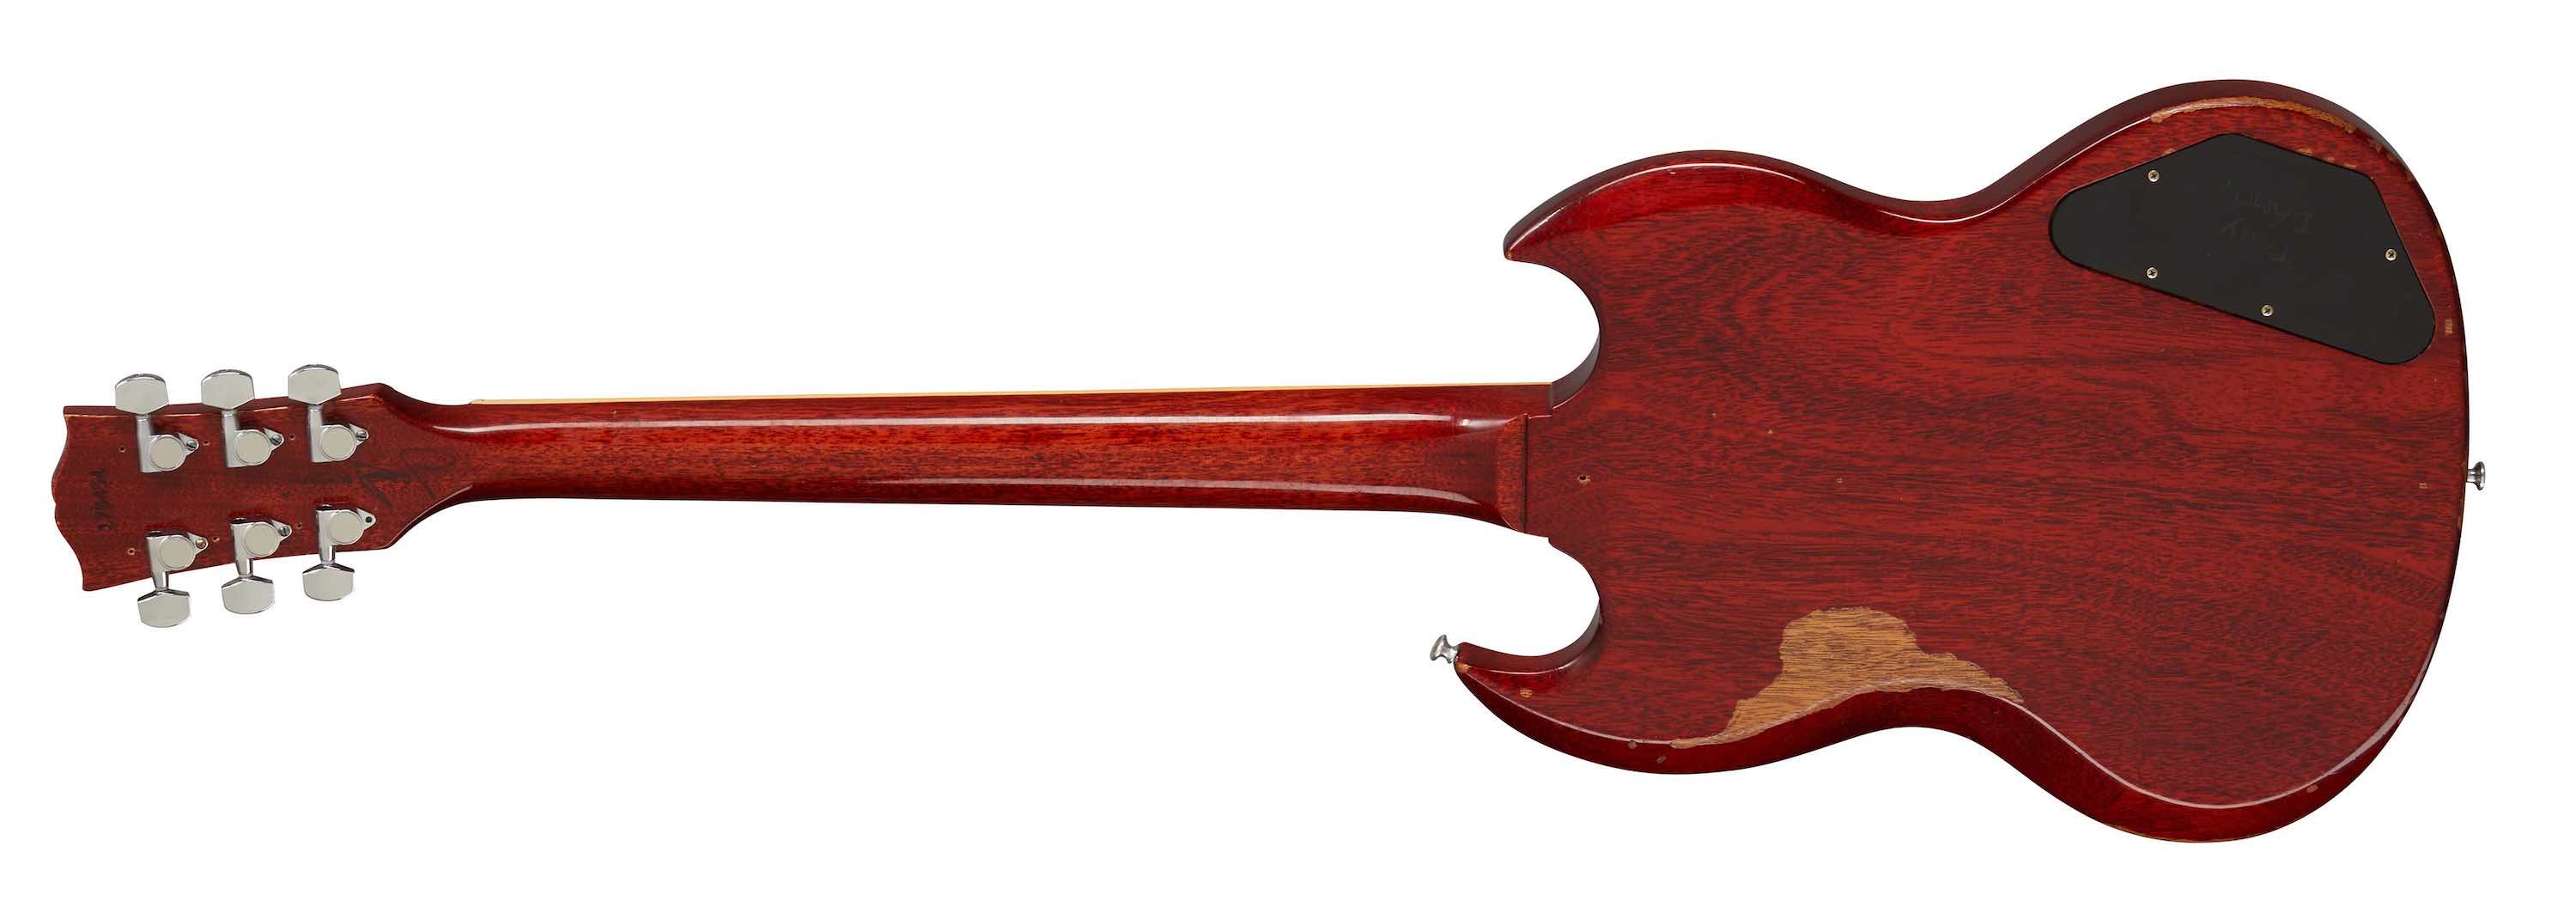 Gibson SG Monkey Tony Iommi chitarra guitar strumenti musicali